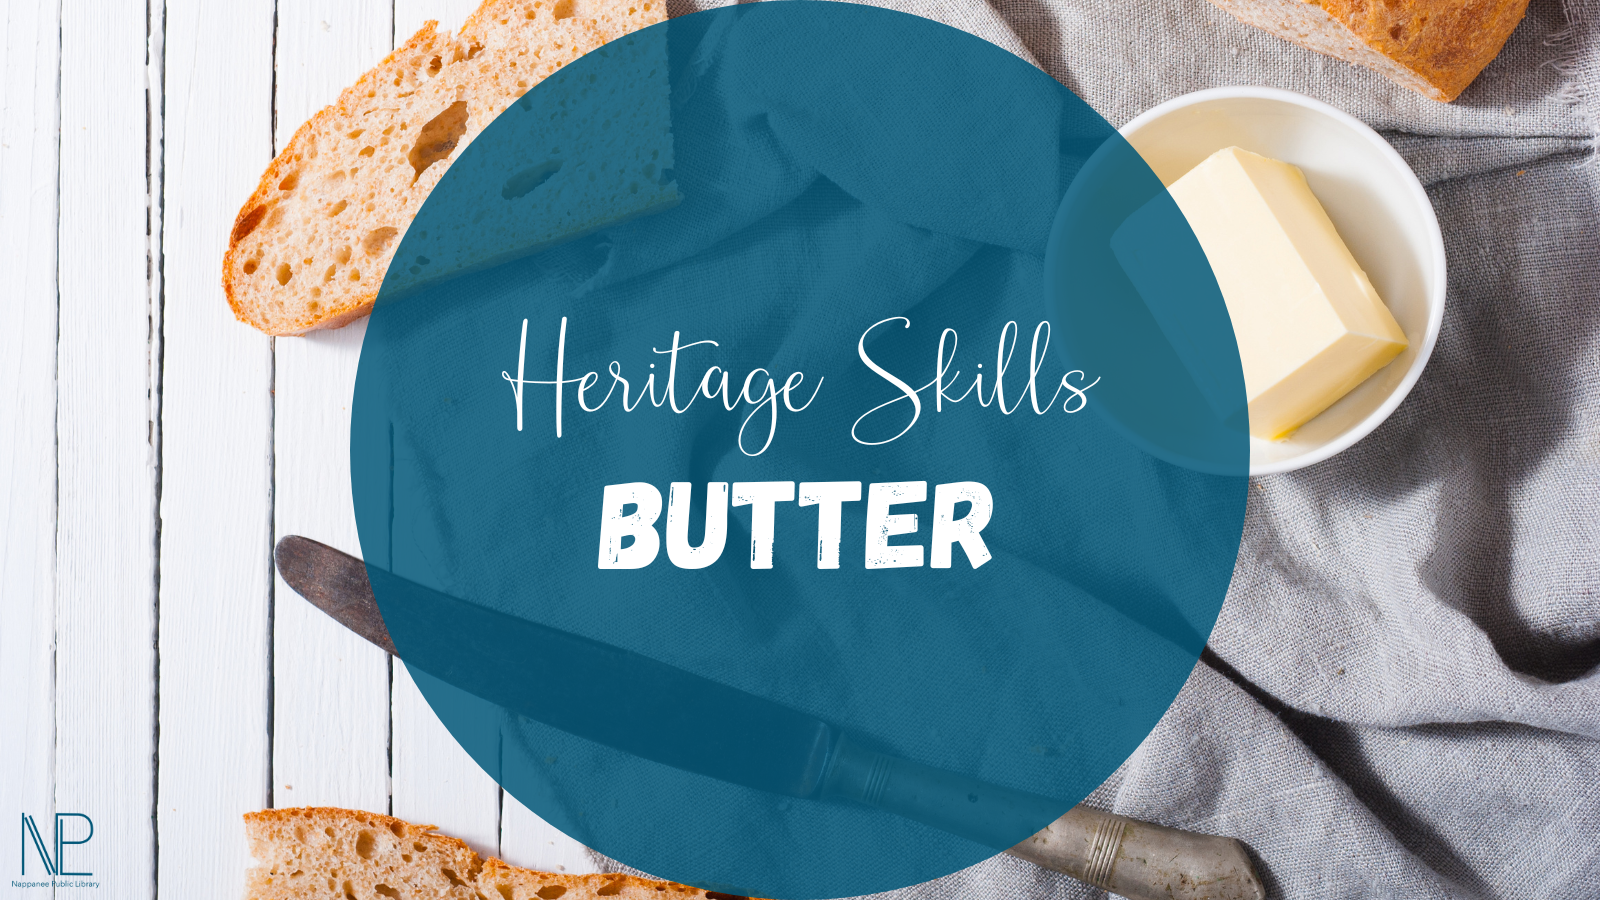 Heritage Skills Butter